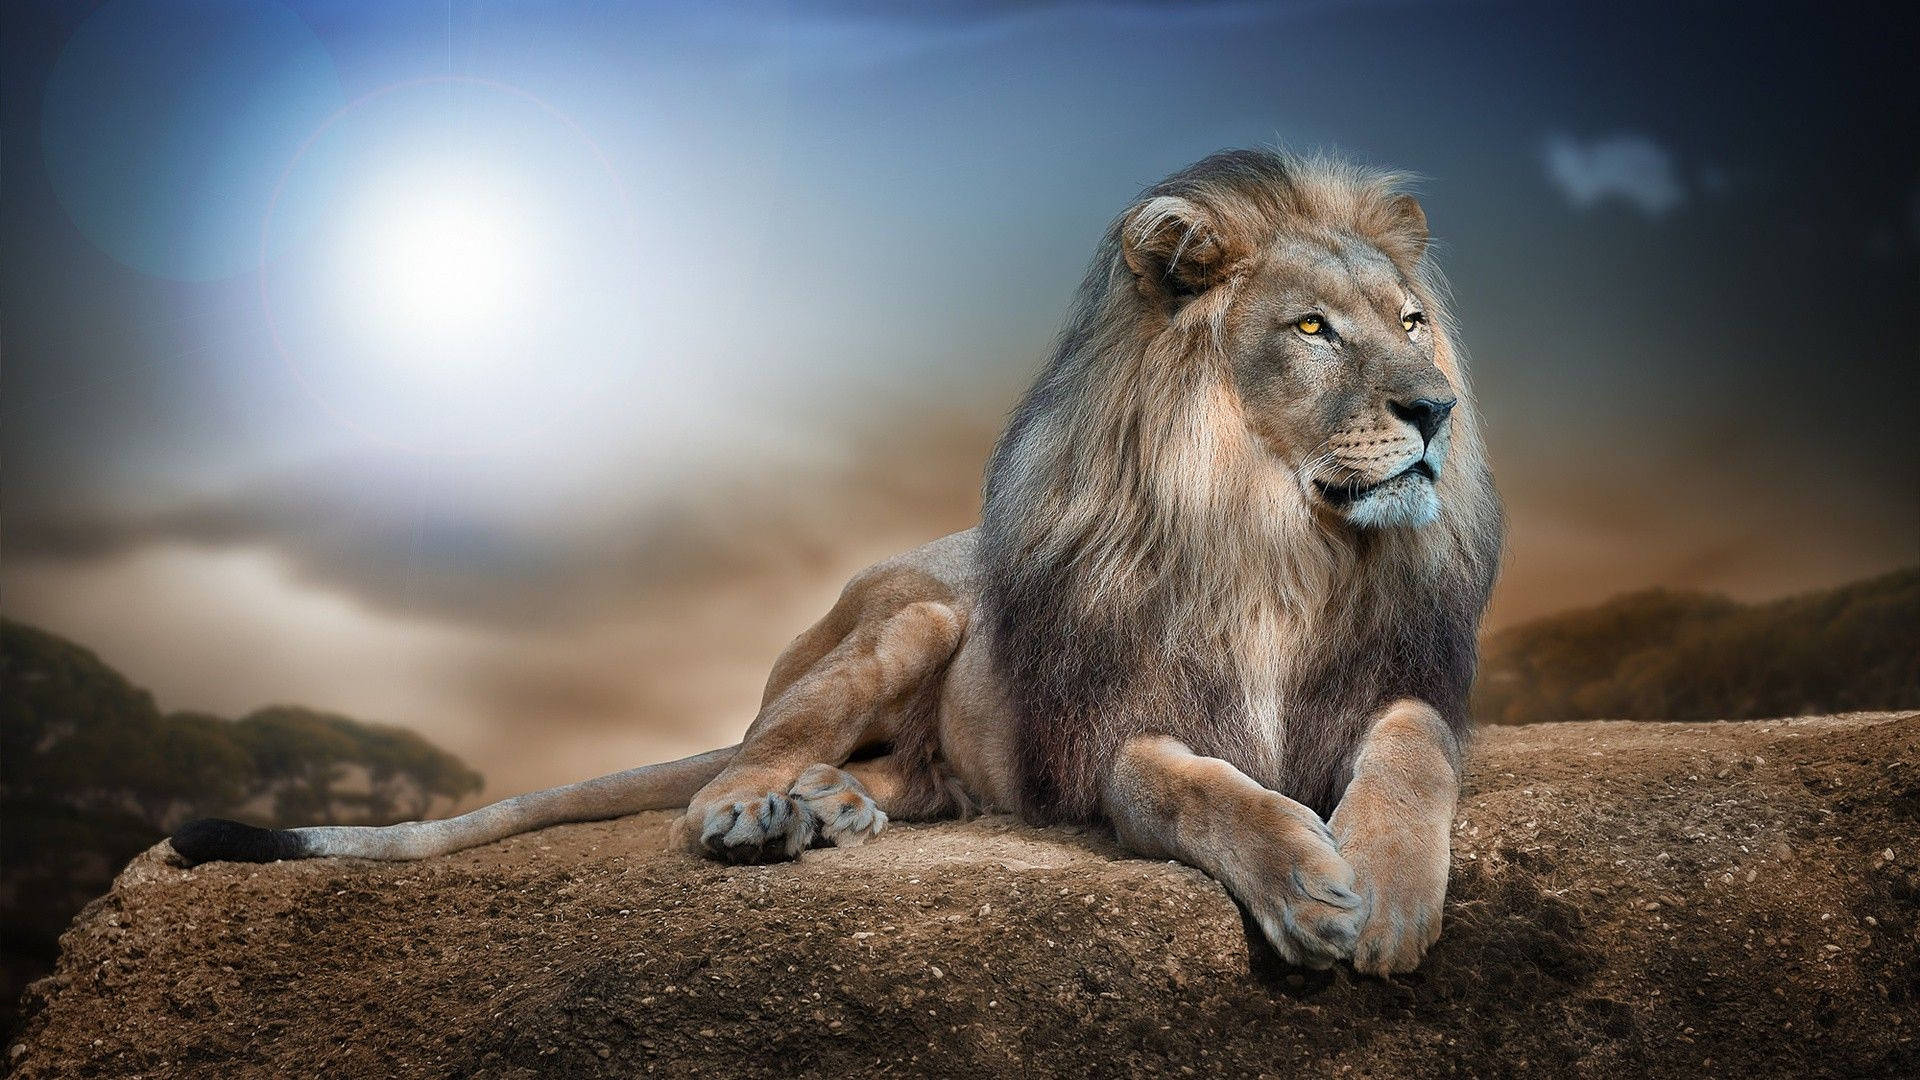 Wild Animal Lion Digital Edit Background